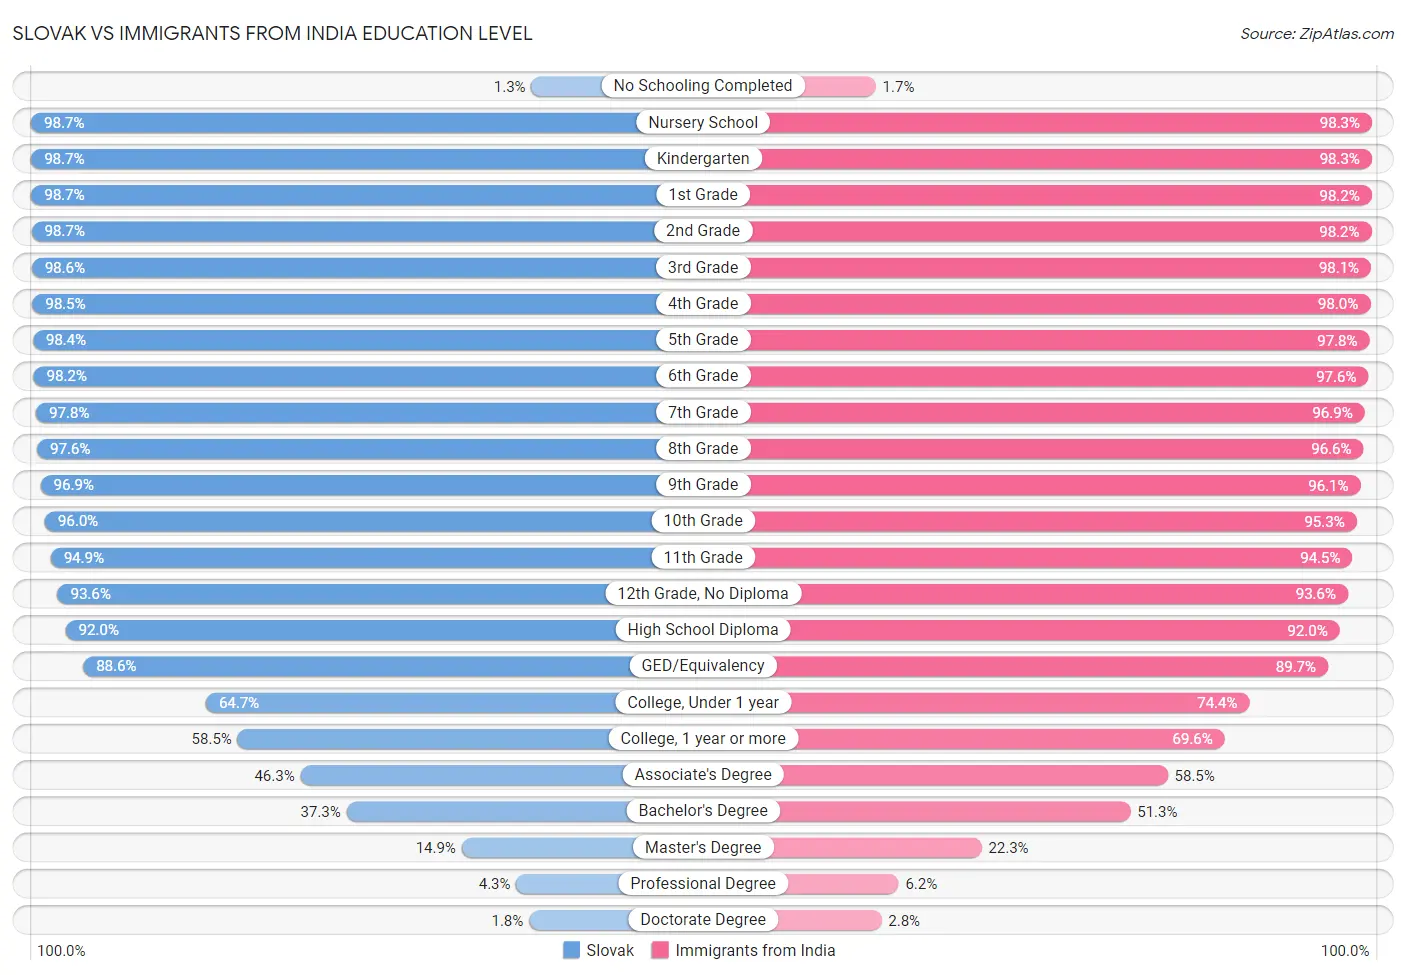 Slovak vs Immigrants from India Education Level